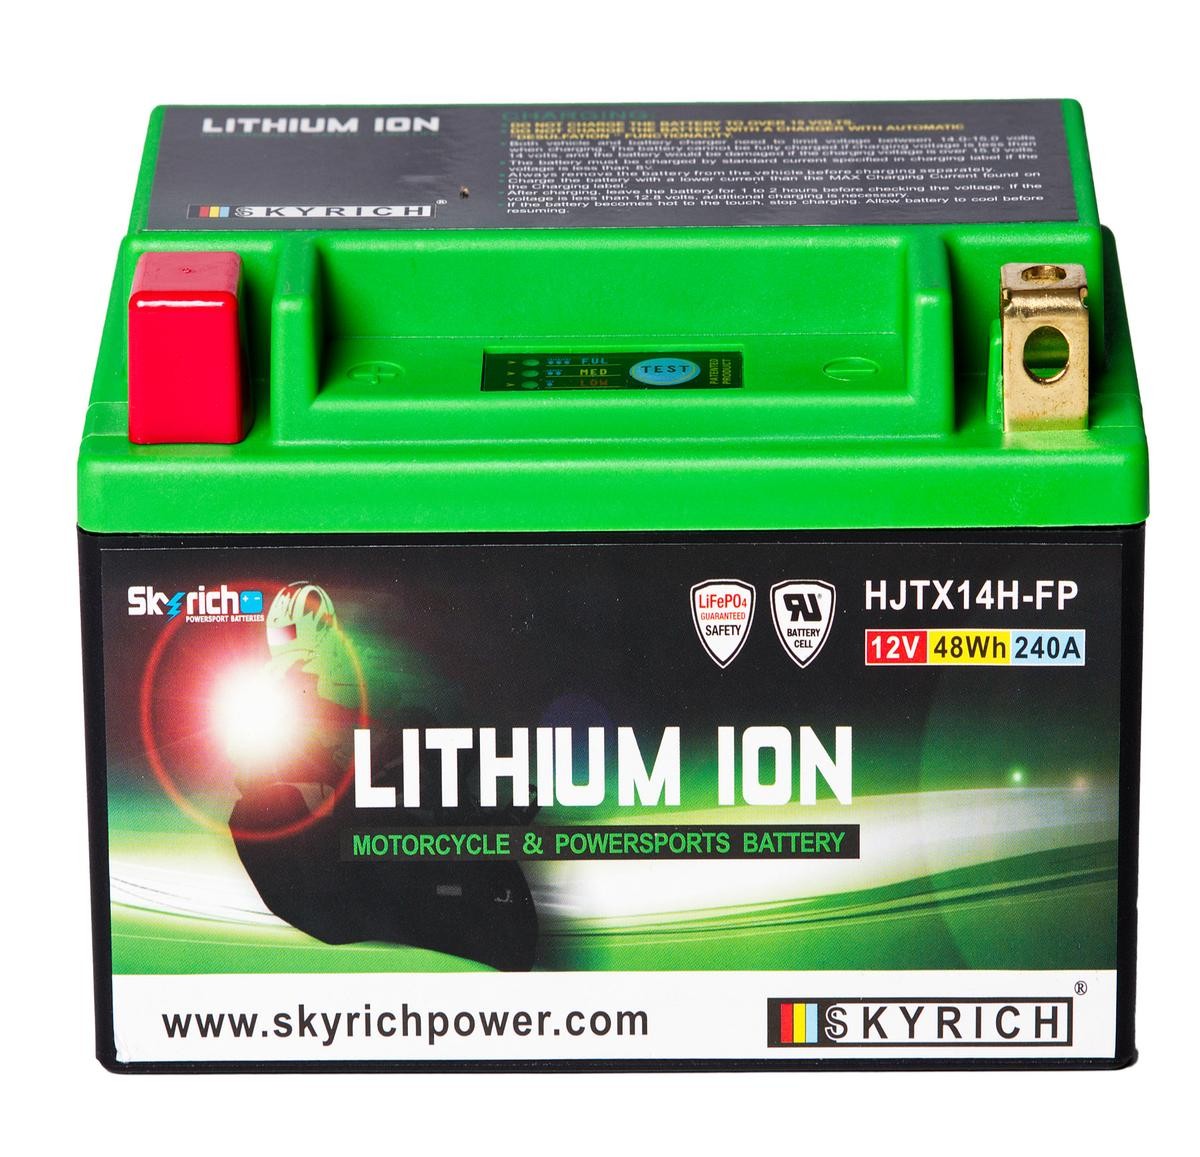 Battery SKYRICH LITHIUM ION 12V 4Ah 240A N Li-Ion Battery - HJTX14H-FP